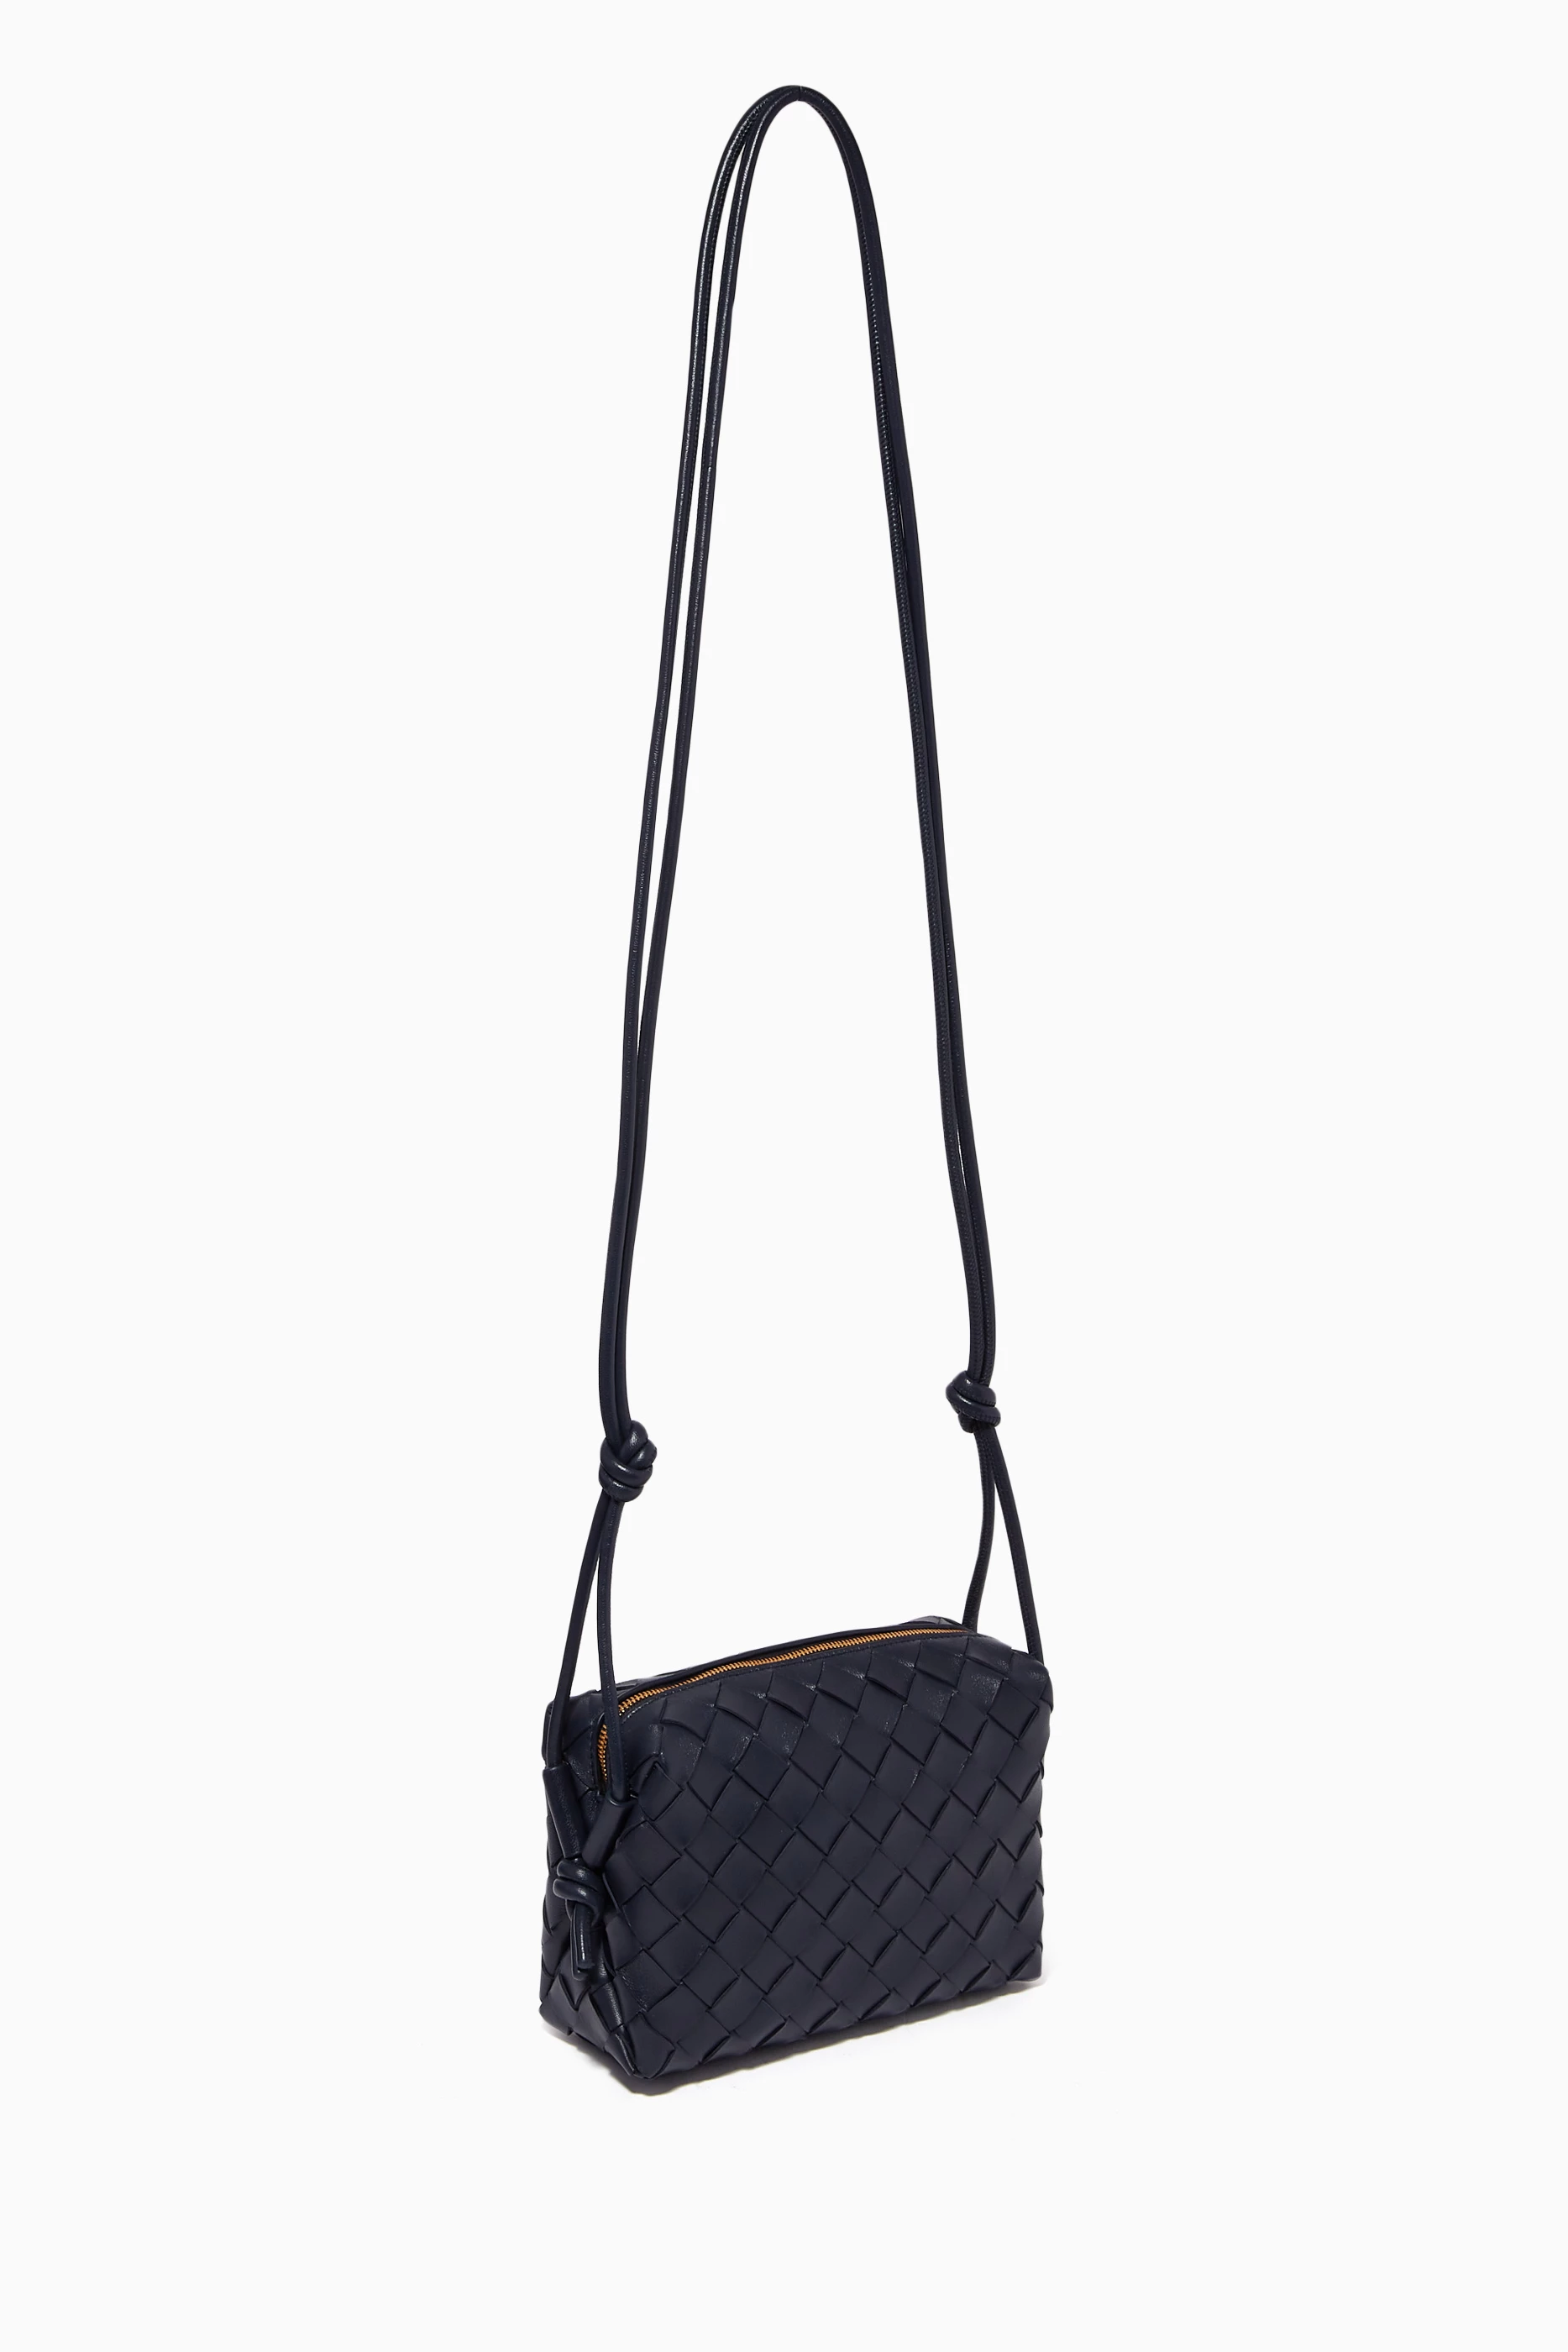 Bottega Veneta® Mini Loop Camera Bag in Camel. Shop online now.